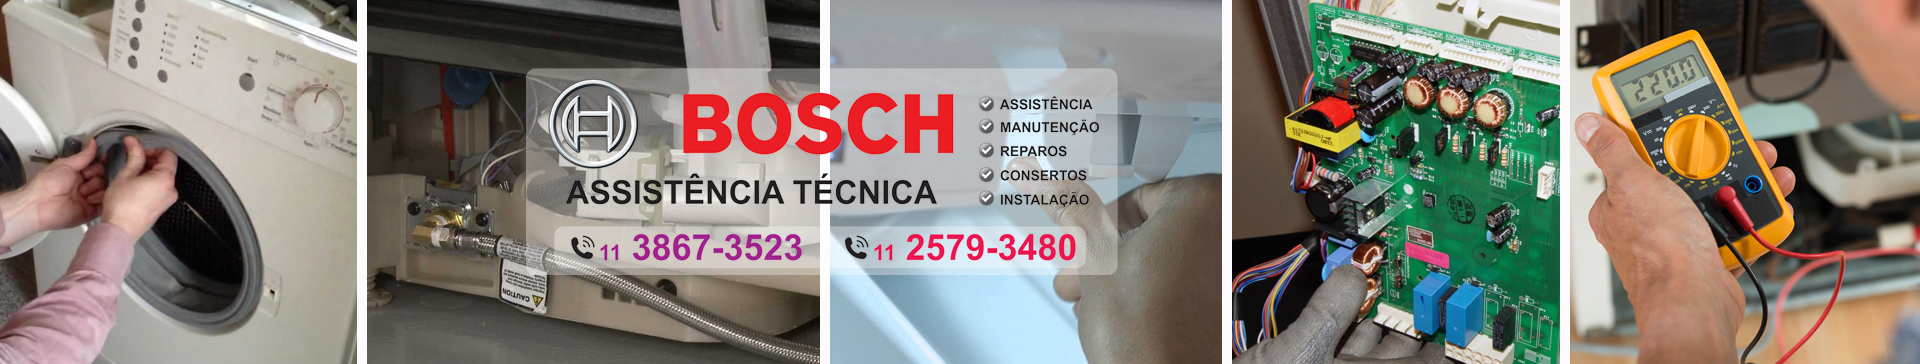 assistencia tecnica bosch sao paulo | Vila Guilherme